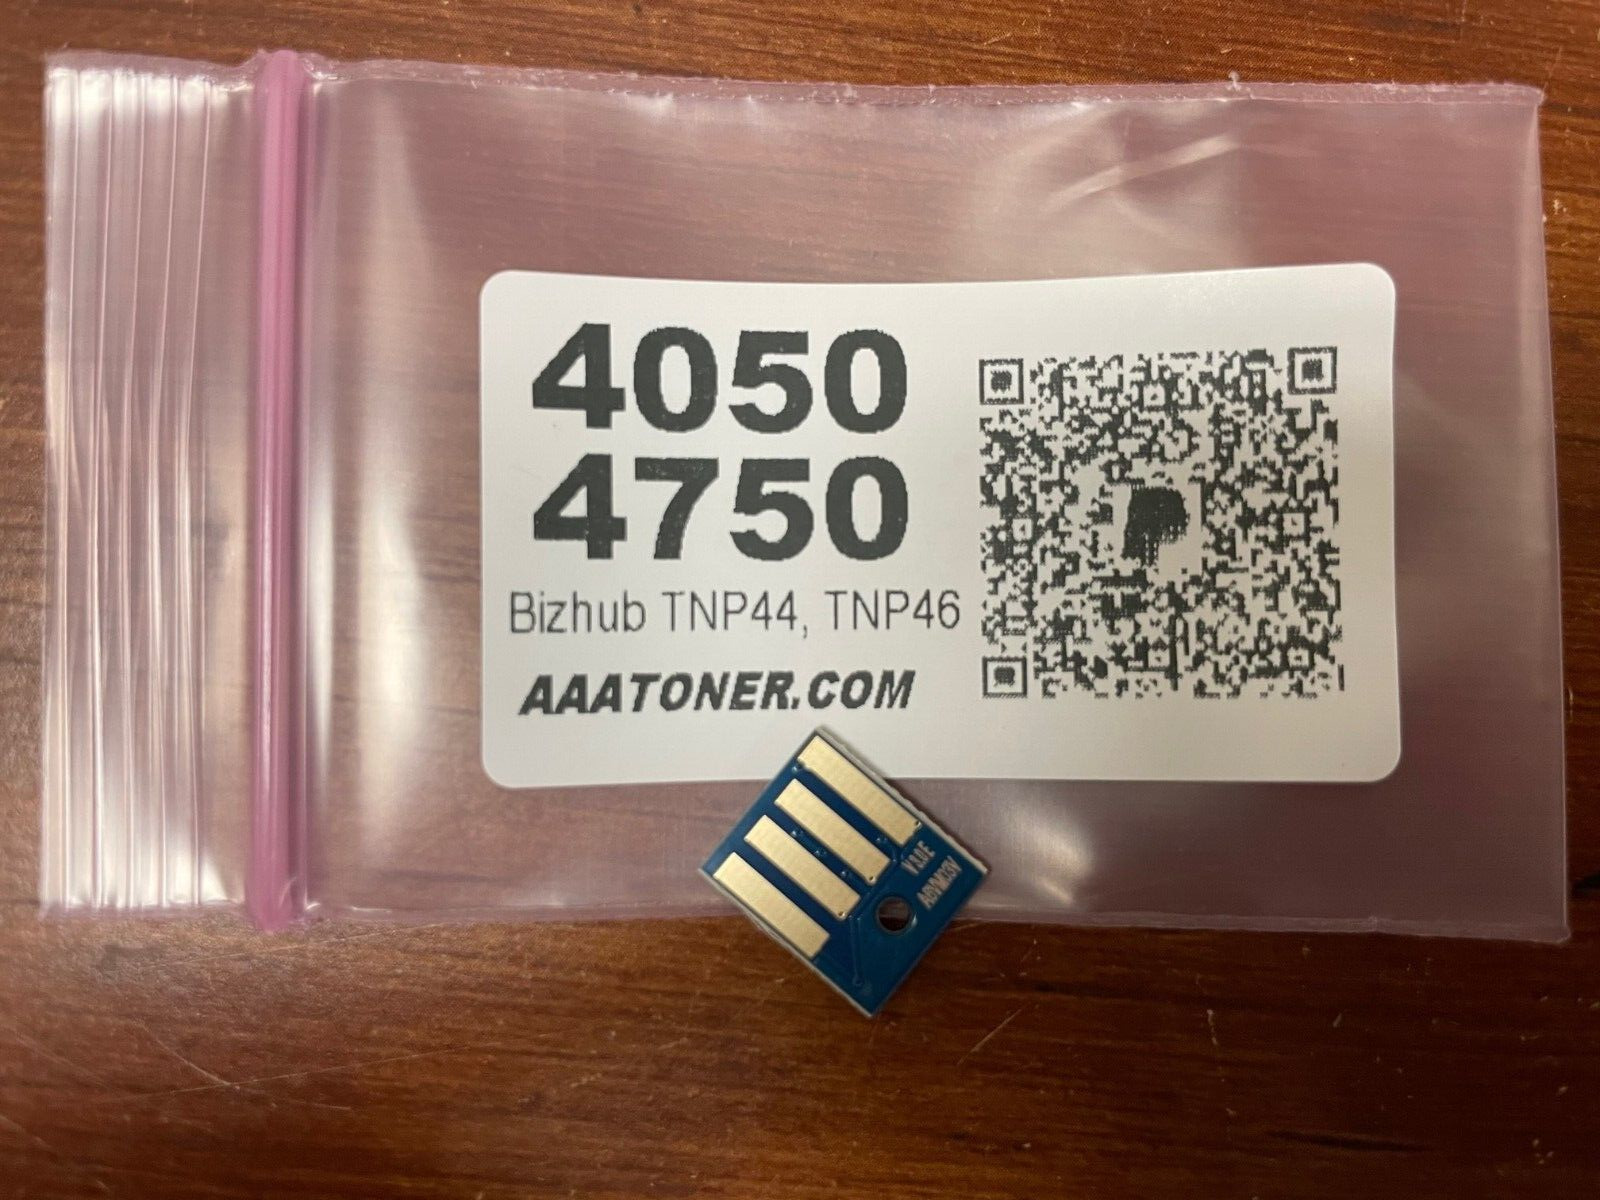 Toner Chip for Konica Minolta TNP44, TNP46, Bizhub 4050, 4750 Refill